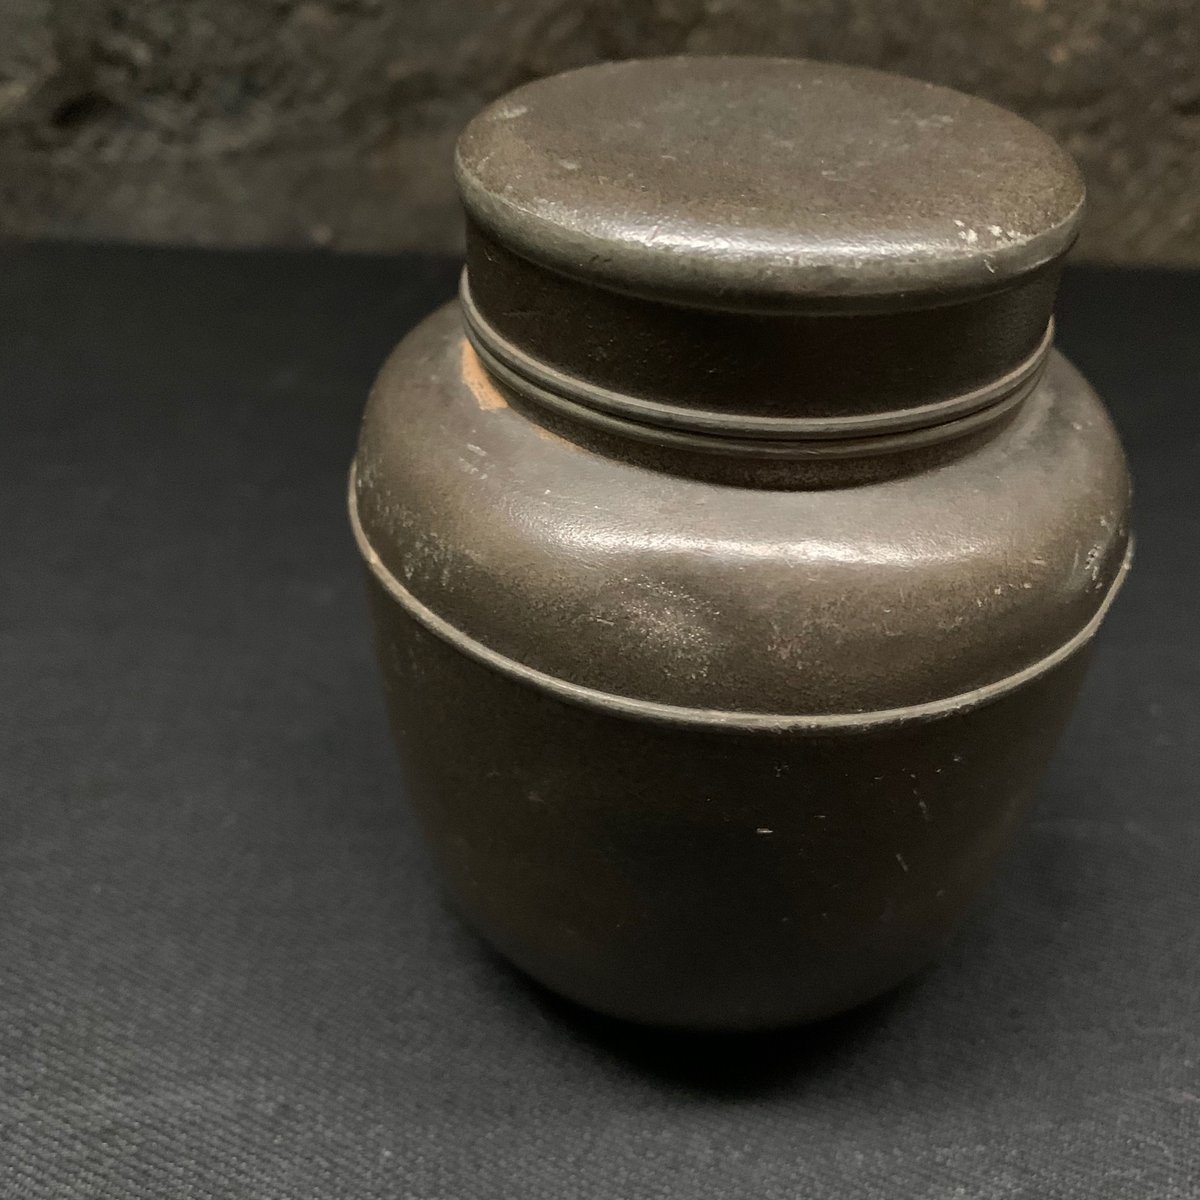 Japan Antique 古錫 純錫 中村半造 茶壺 煎茶 道具 錫 茶壷 茶入 茶道具 骨董